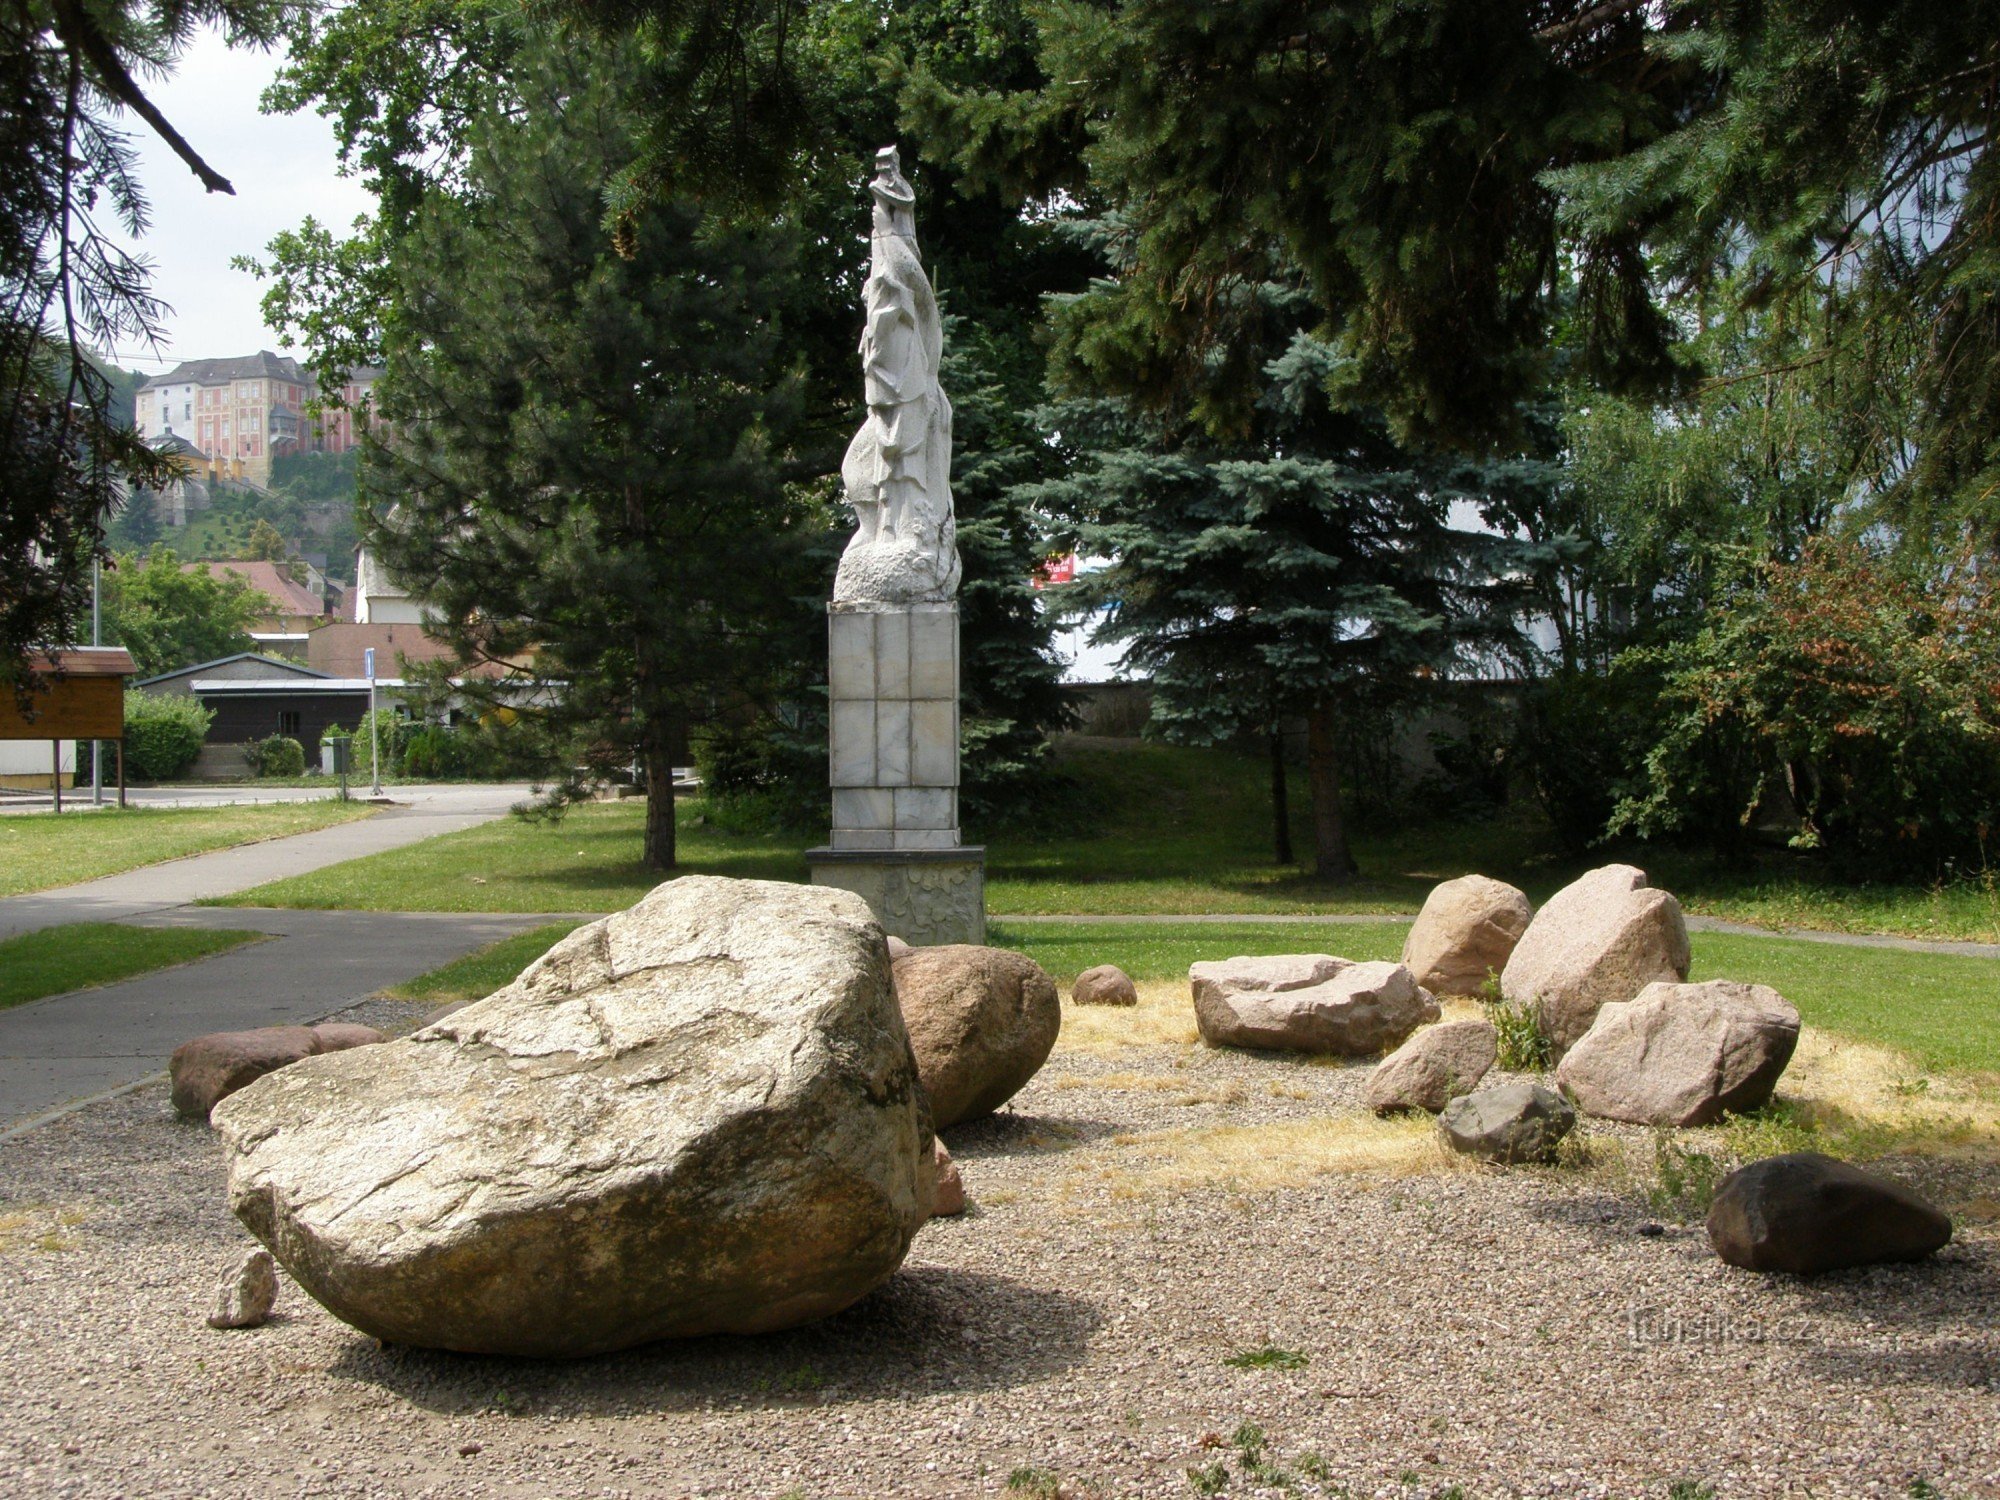 Javorník - Garden of errant boulders